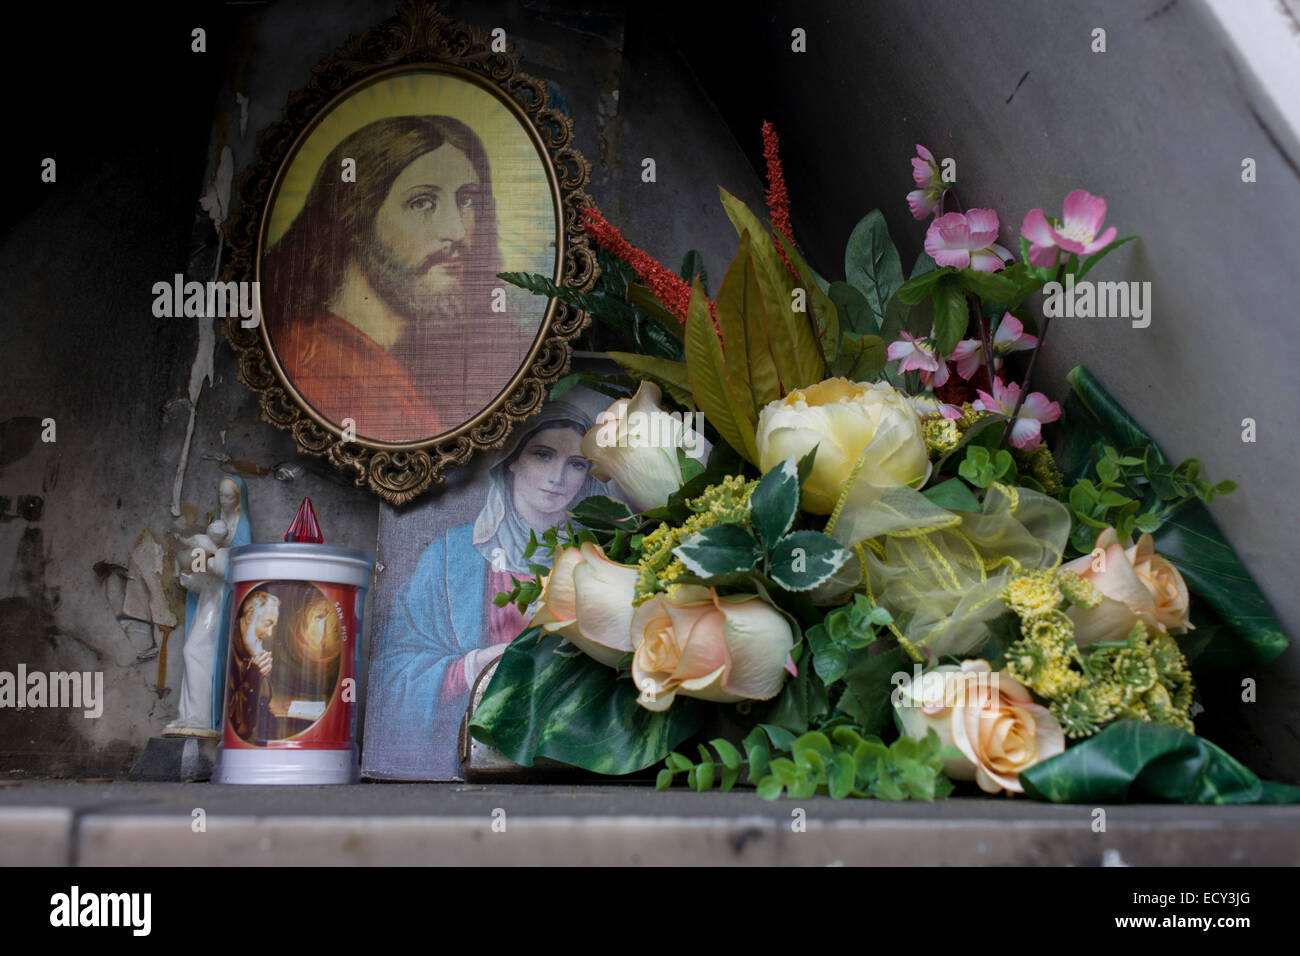 Religious edicola (aedicula votiva) shrine featuring Jesus and the Madonna, Naples, Italy. Stock Photo